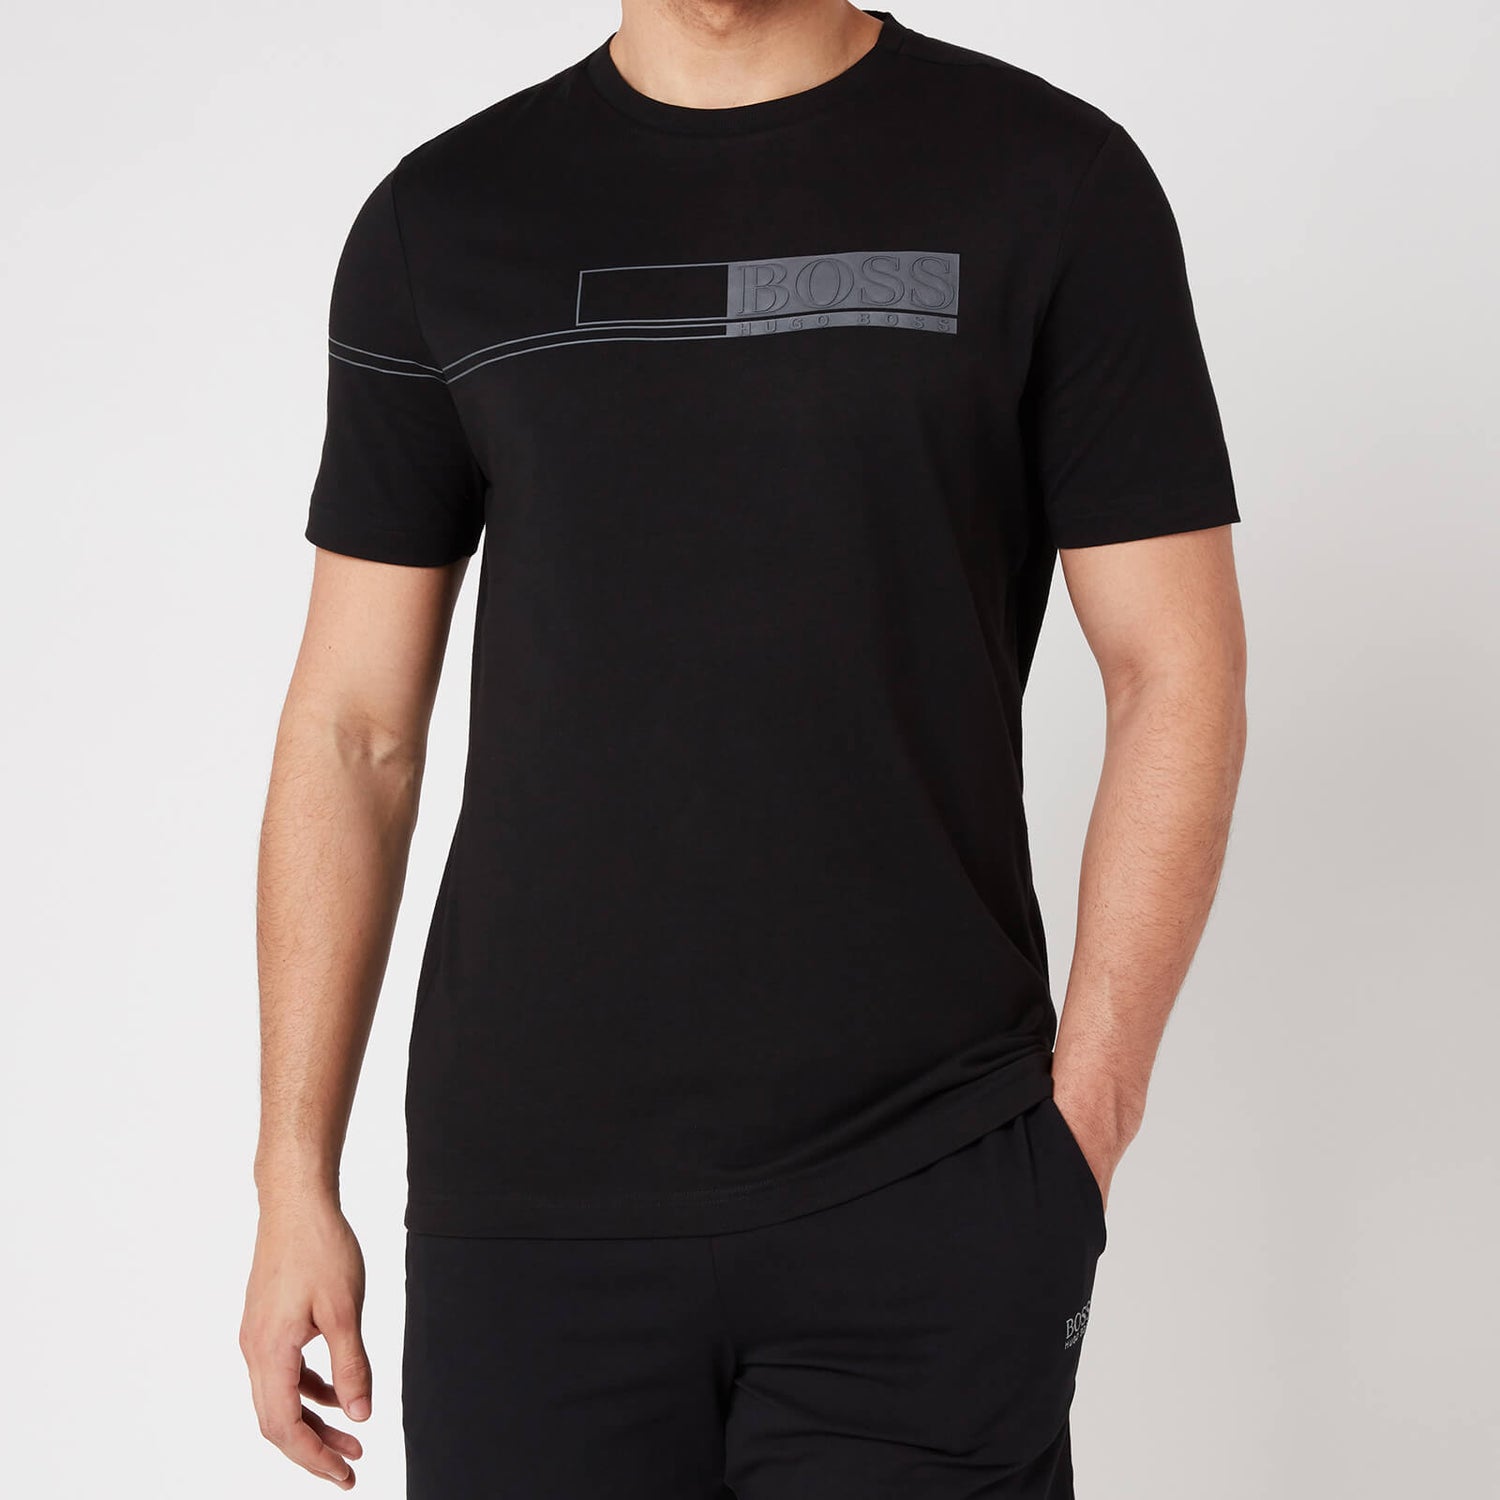 BOSS Athleisure Men's Tee 1 T-Shirt - Black